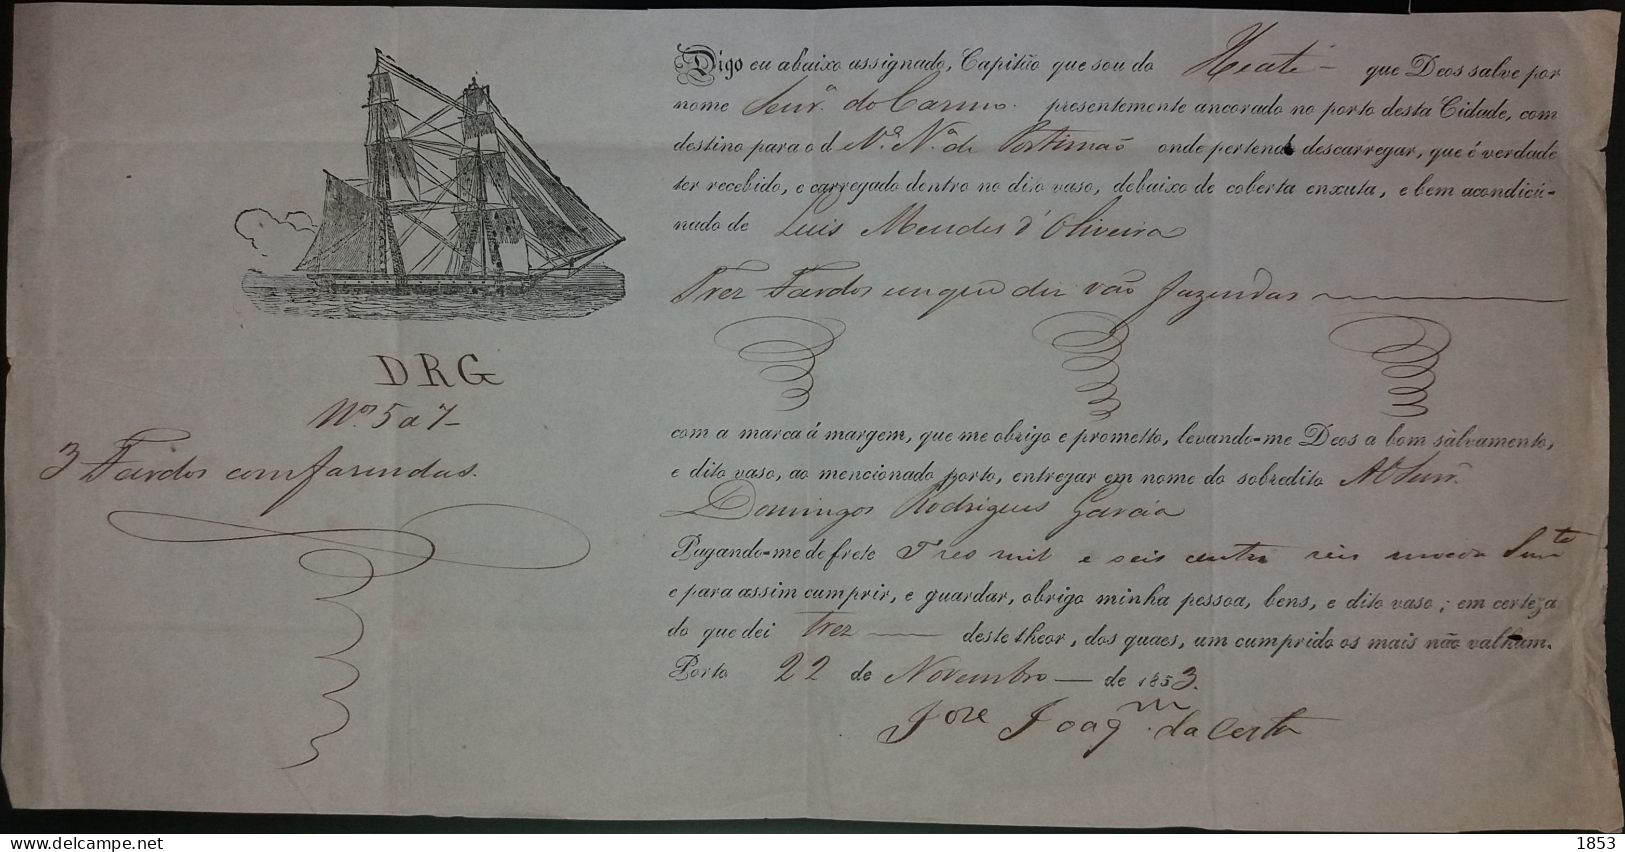 CORREIO MARITIMO - CONHECIMENTO DE EMBARQUE - 22 NOV 1853 - Lettres & Documents